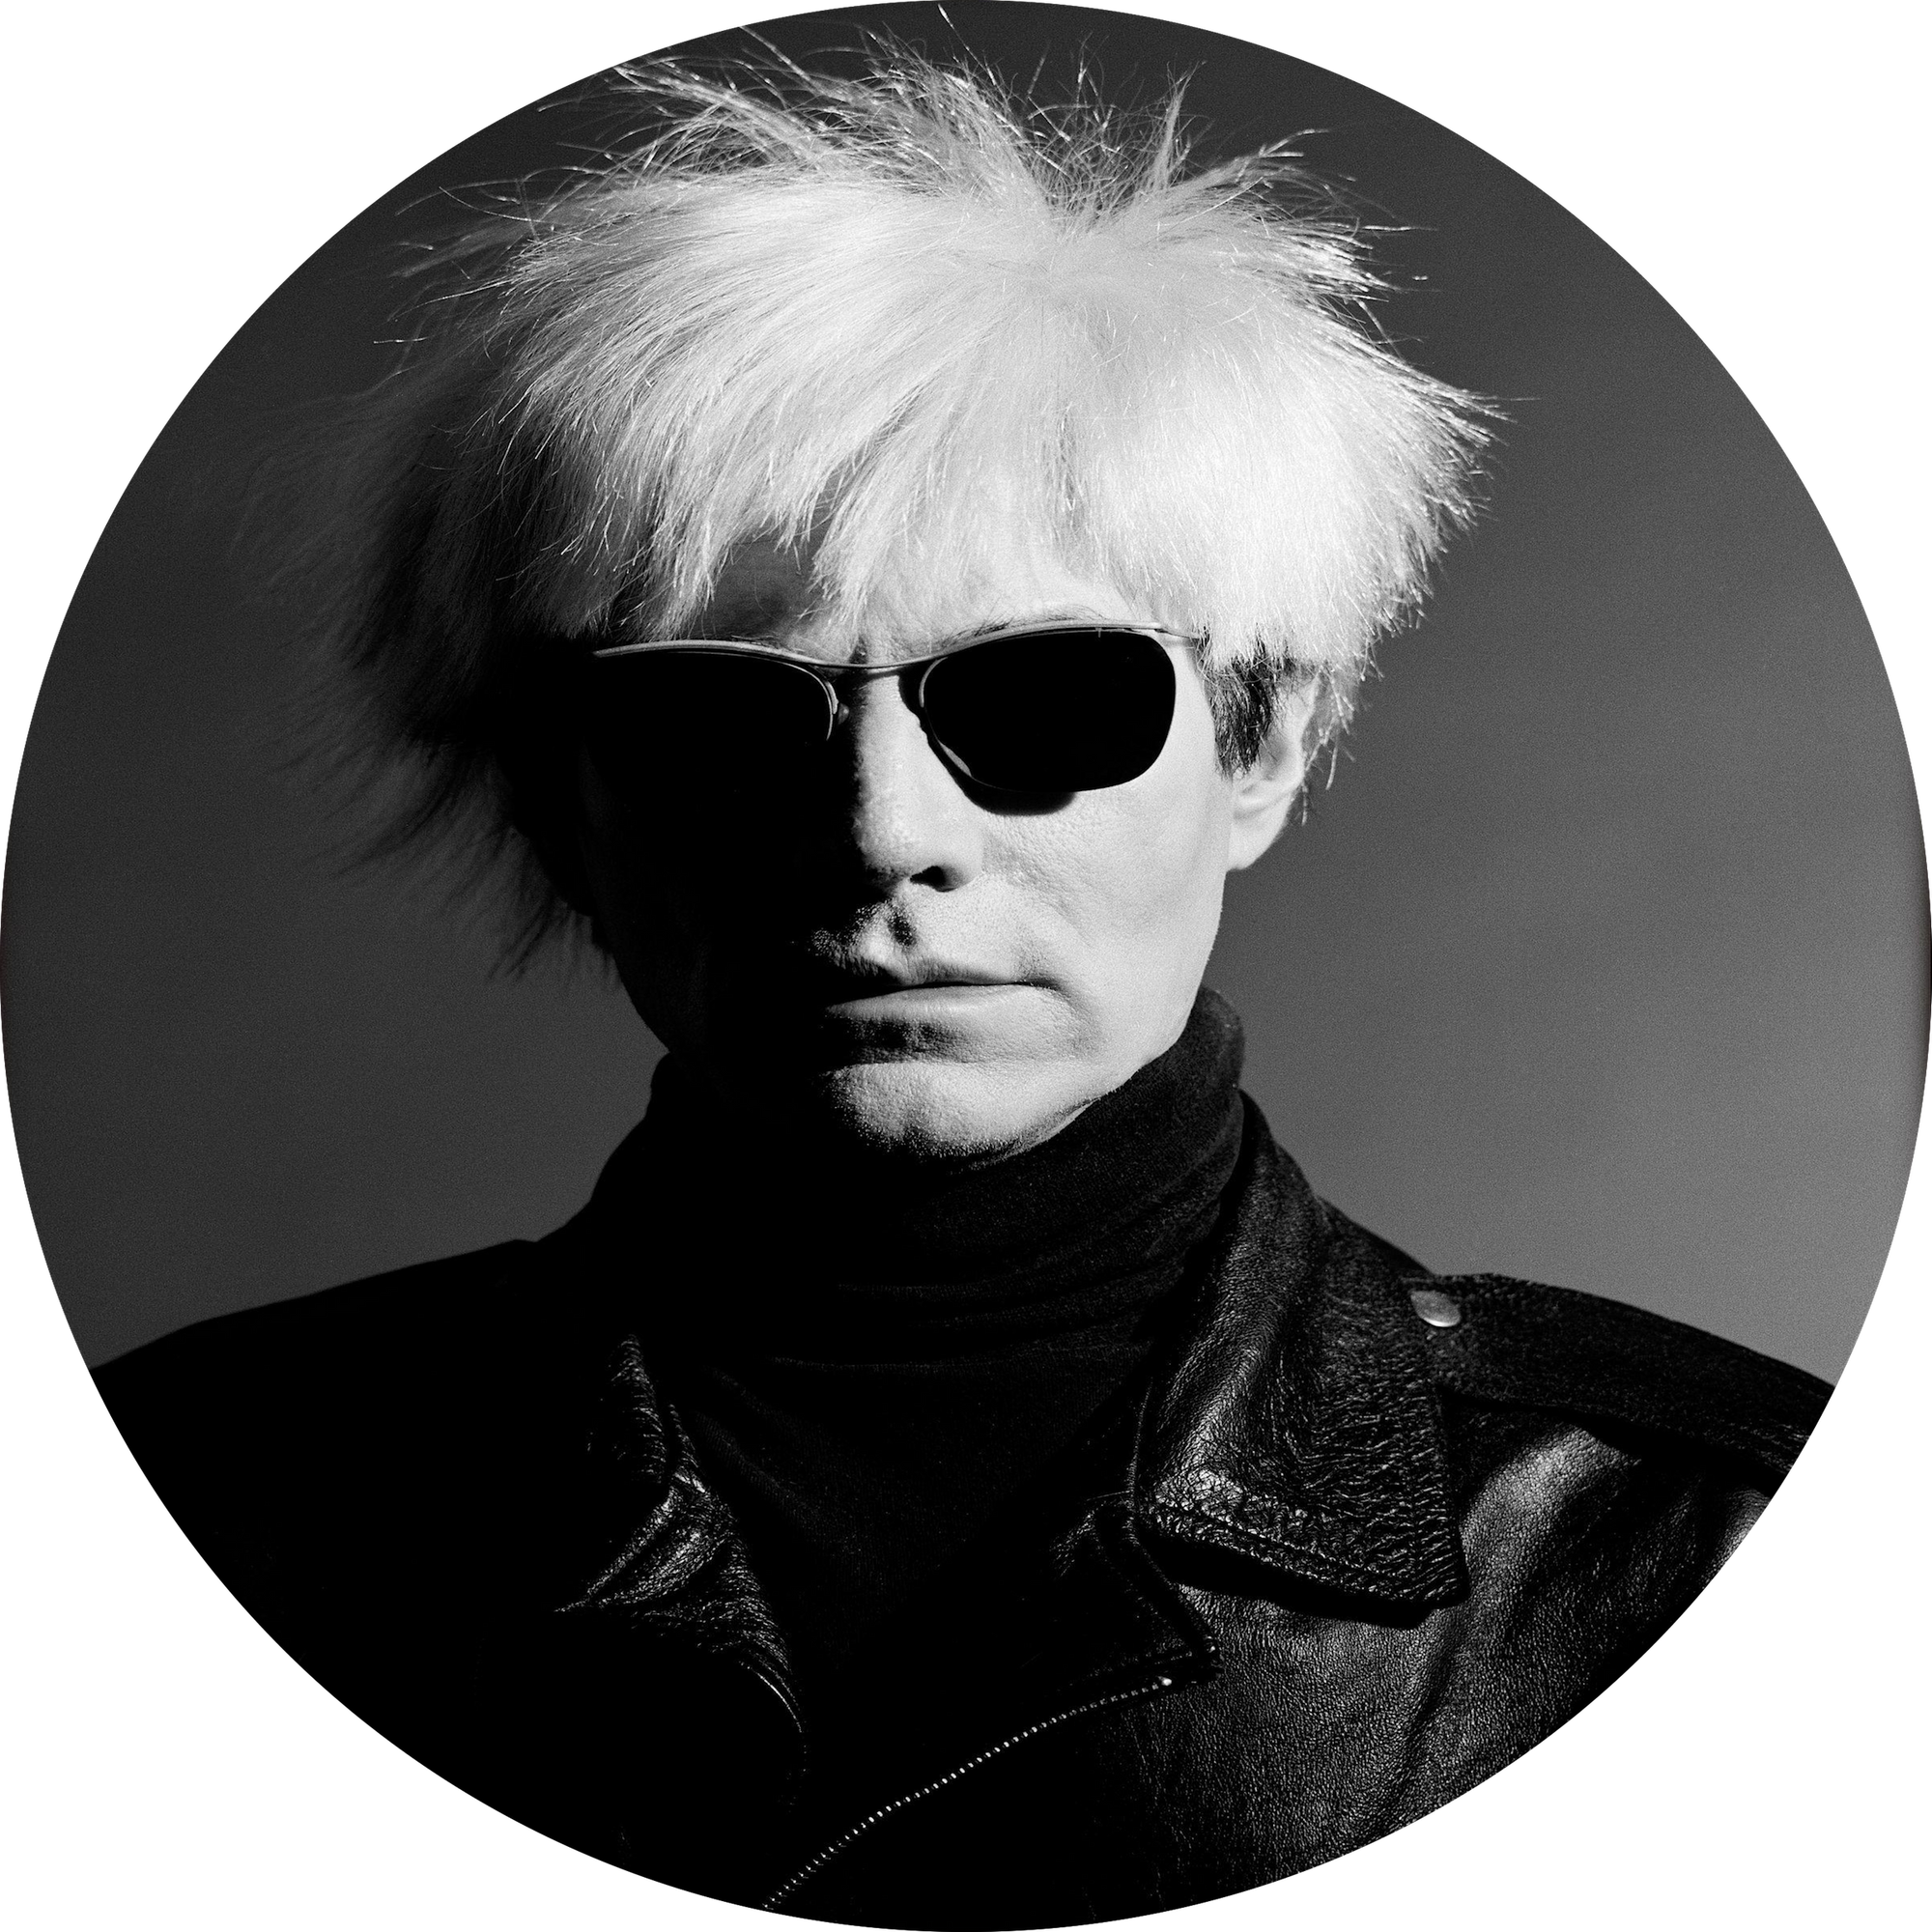 Andy Warhol / Sunday B Morning